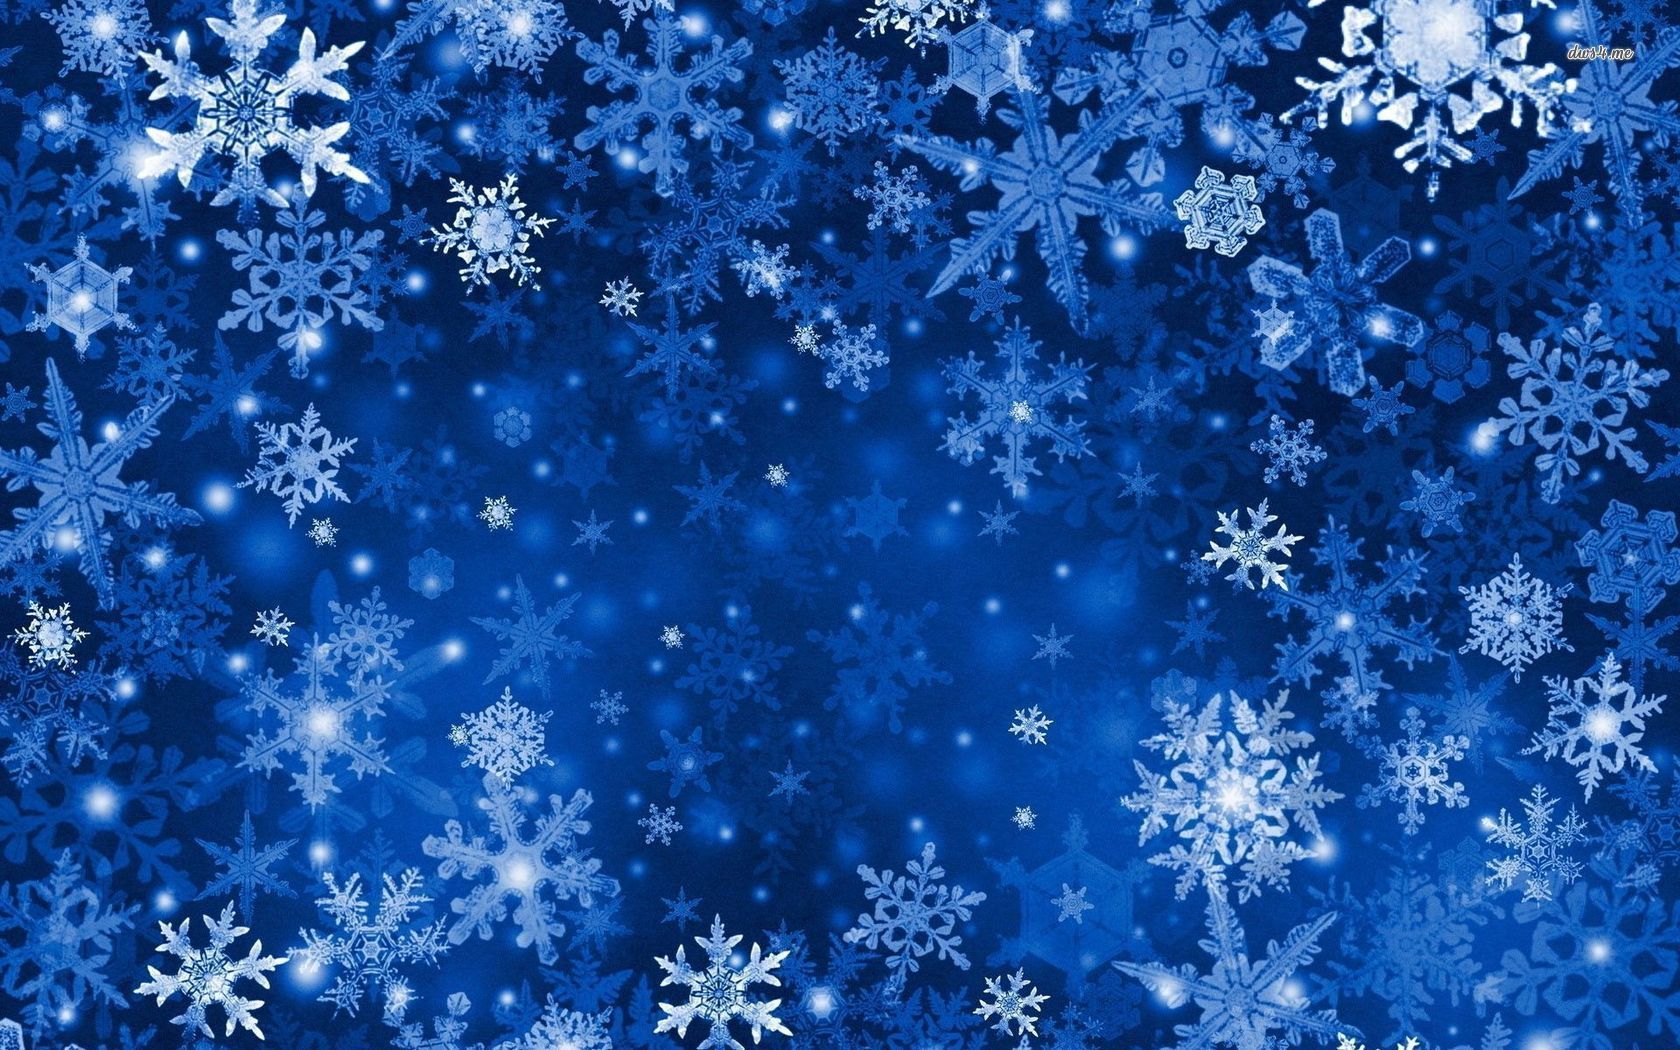 Blue Snowflakes HD wallpaper. Snowflake wallpaper, Christmas snowflakes wallpaper, Winter wallpaper